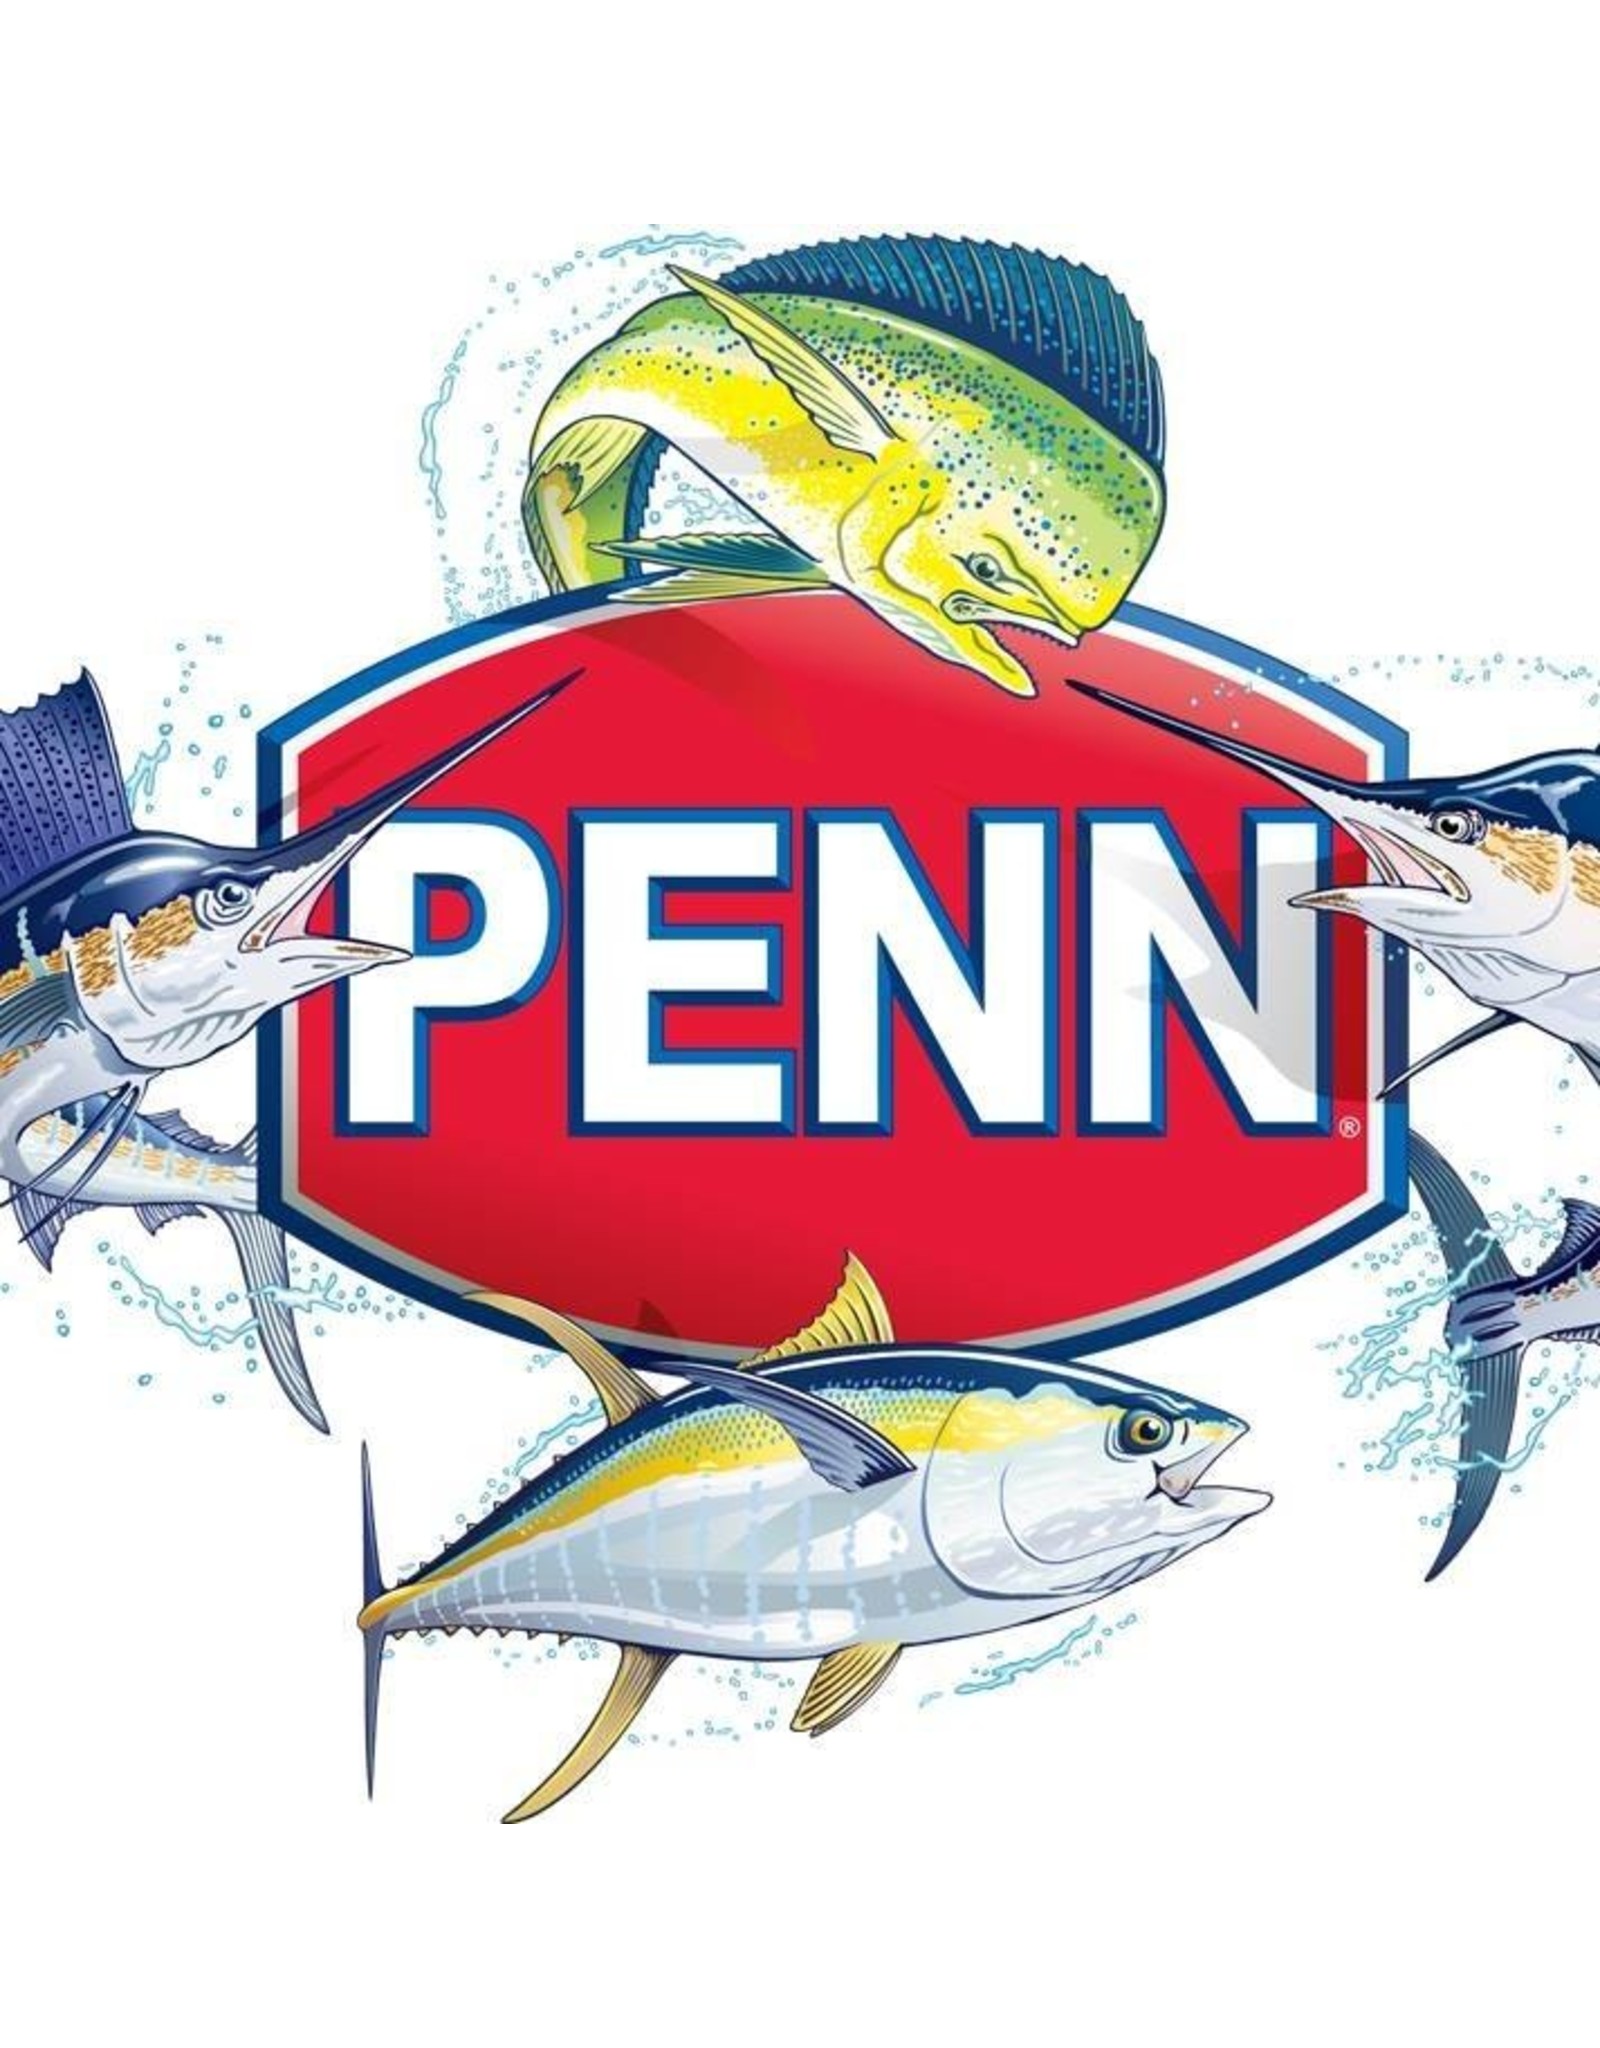 Penn 49-101  CLICK SPRING/NLA